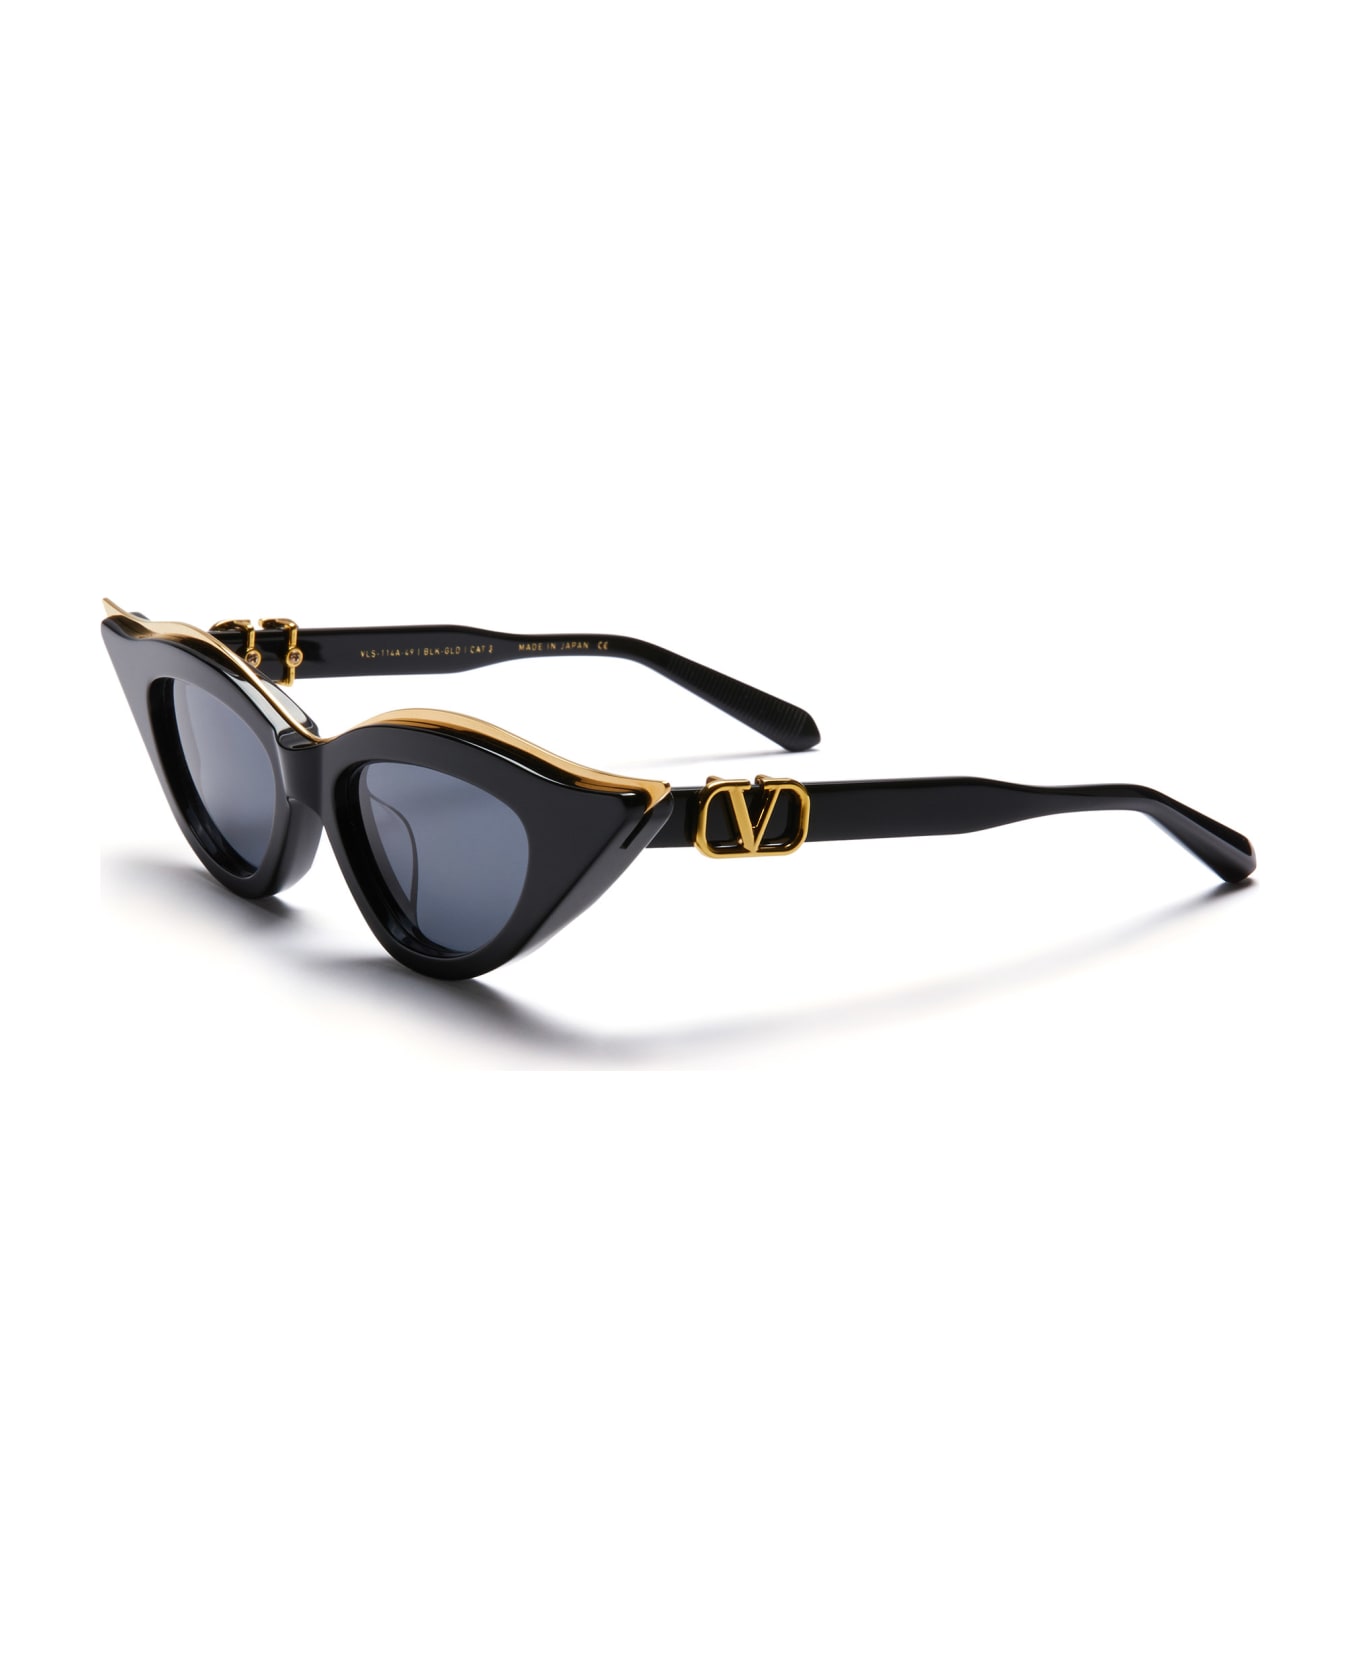 Valentino Eyewear Goldcut-ii - Black/ Yellow Gold Sunglasses - Black/gold